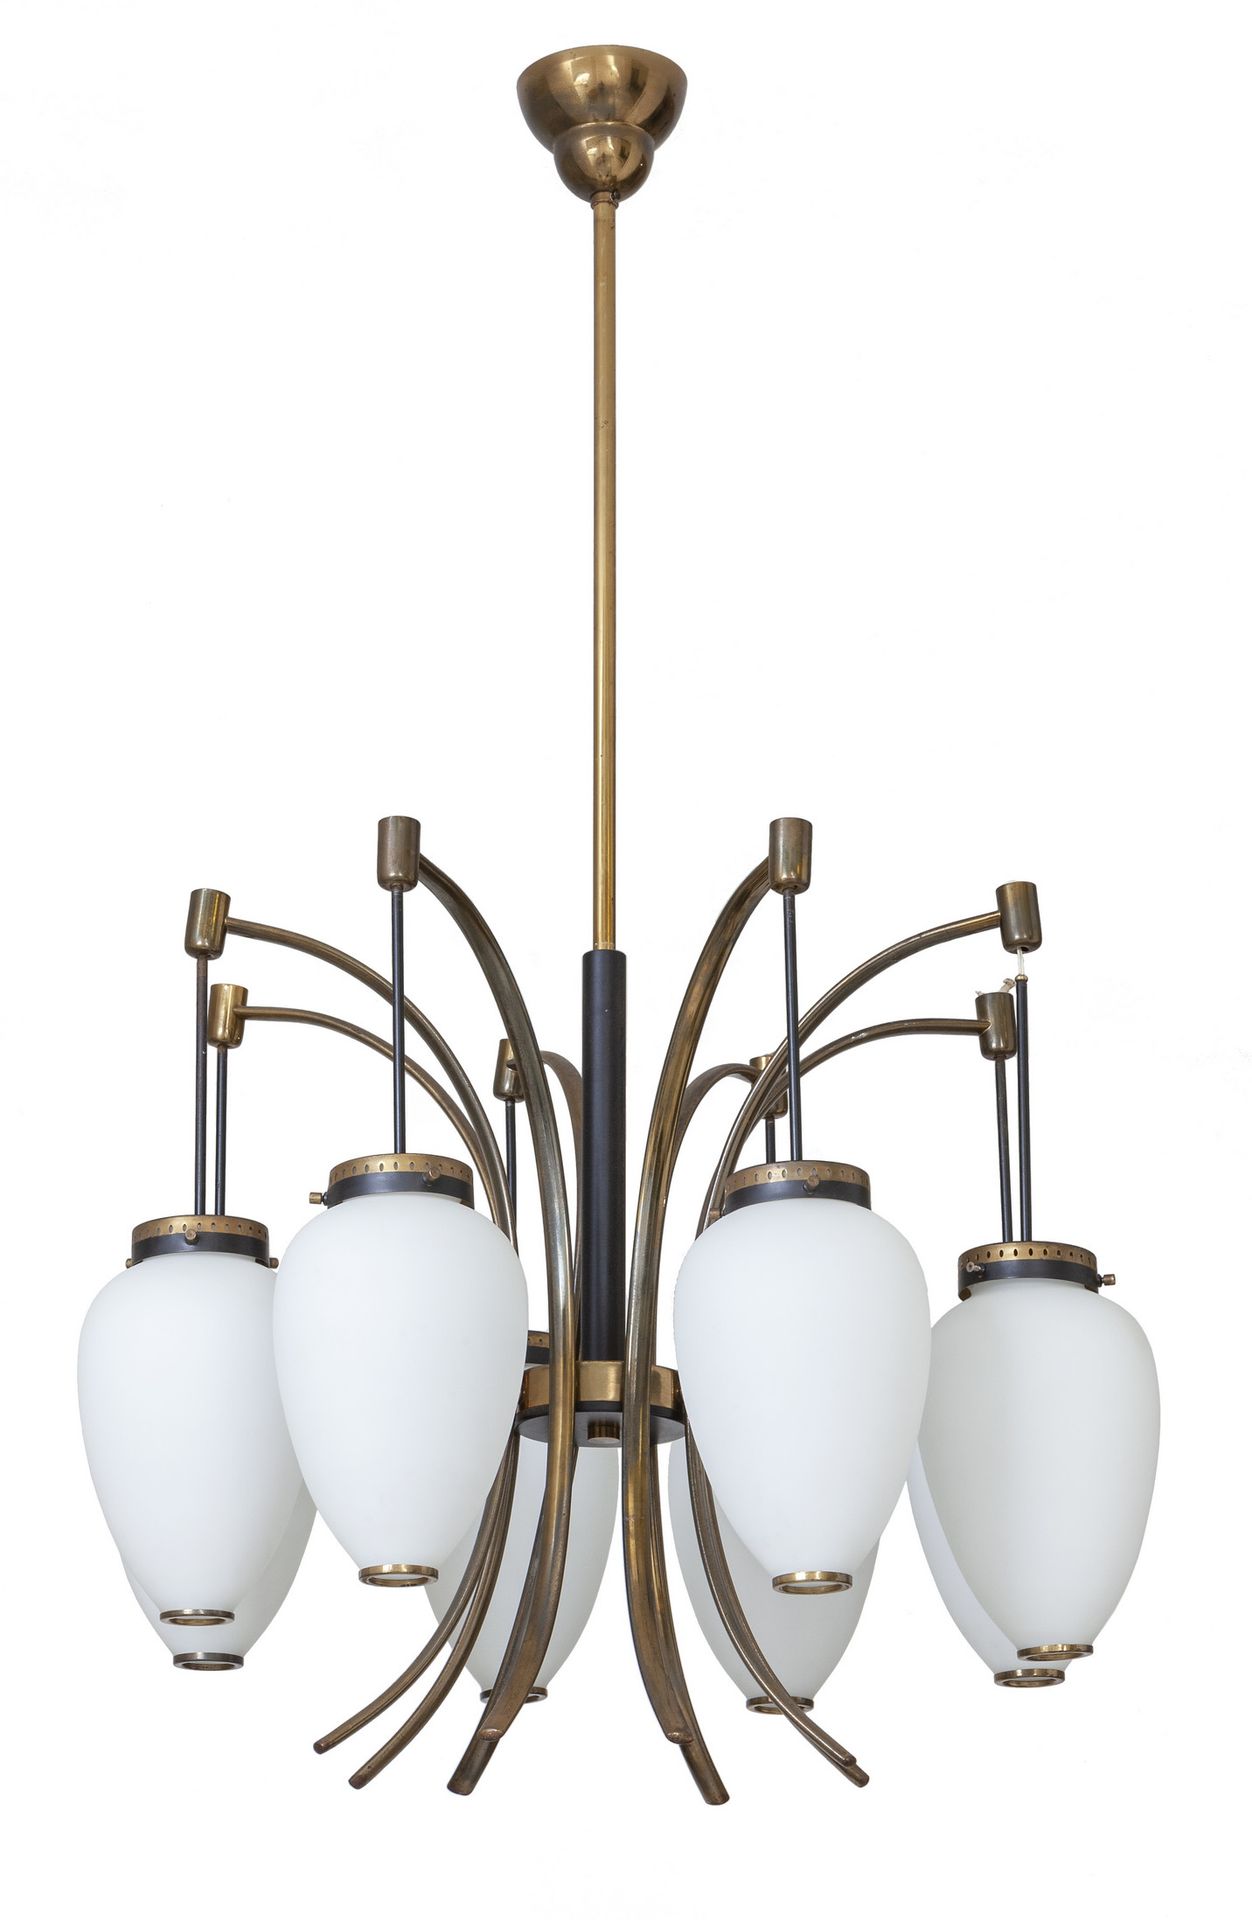 LAMPADARIO 60年代的灯具。
彩绘黄铜钢缎面乳白玻璃。
高度100厘米直径60厘米。